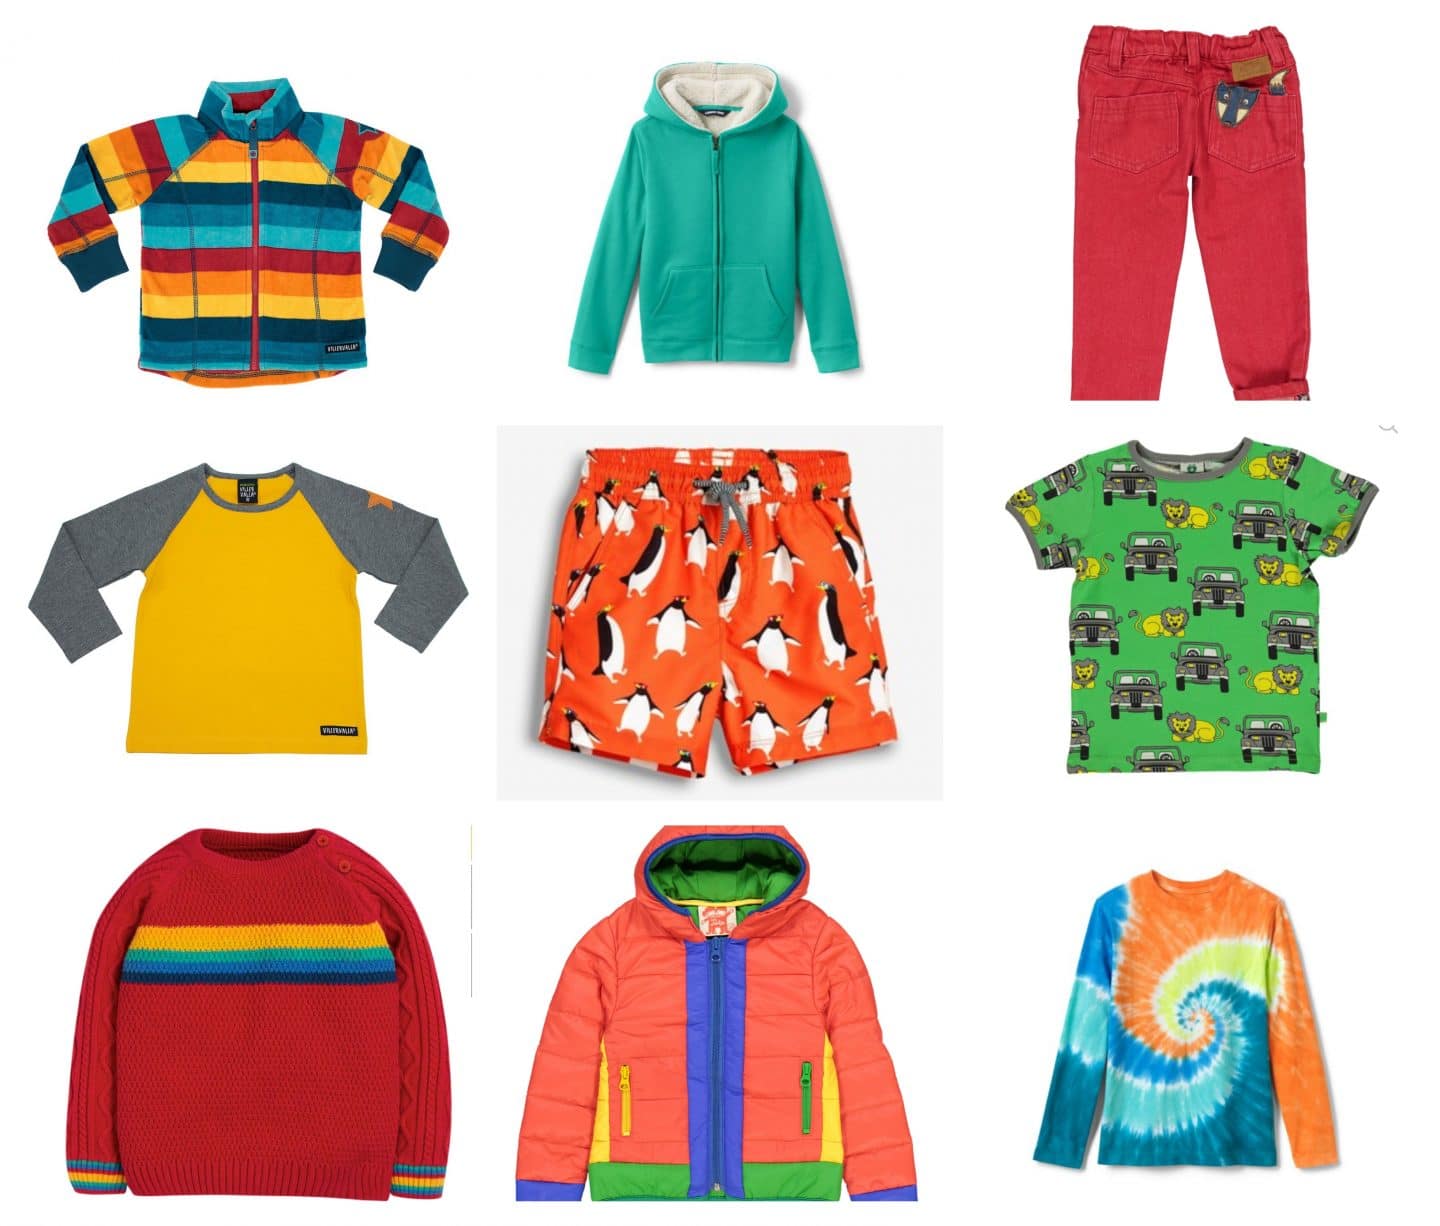 Colourful children’s clothes